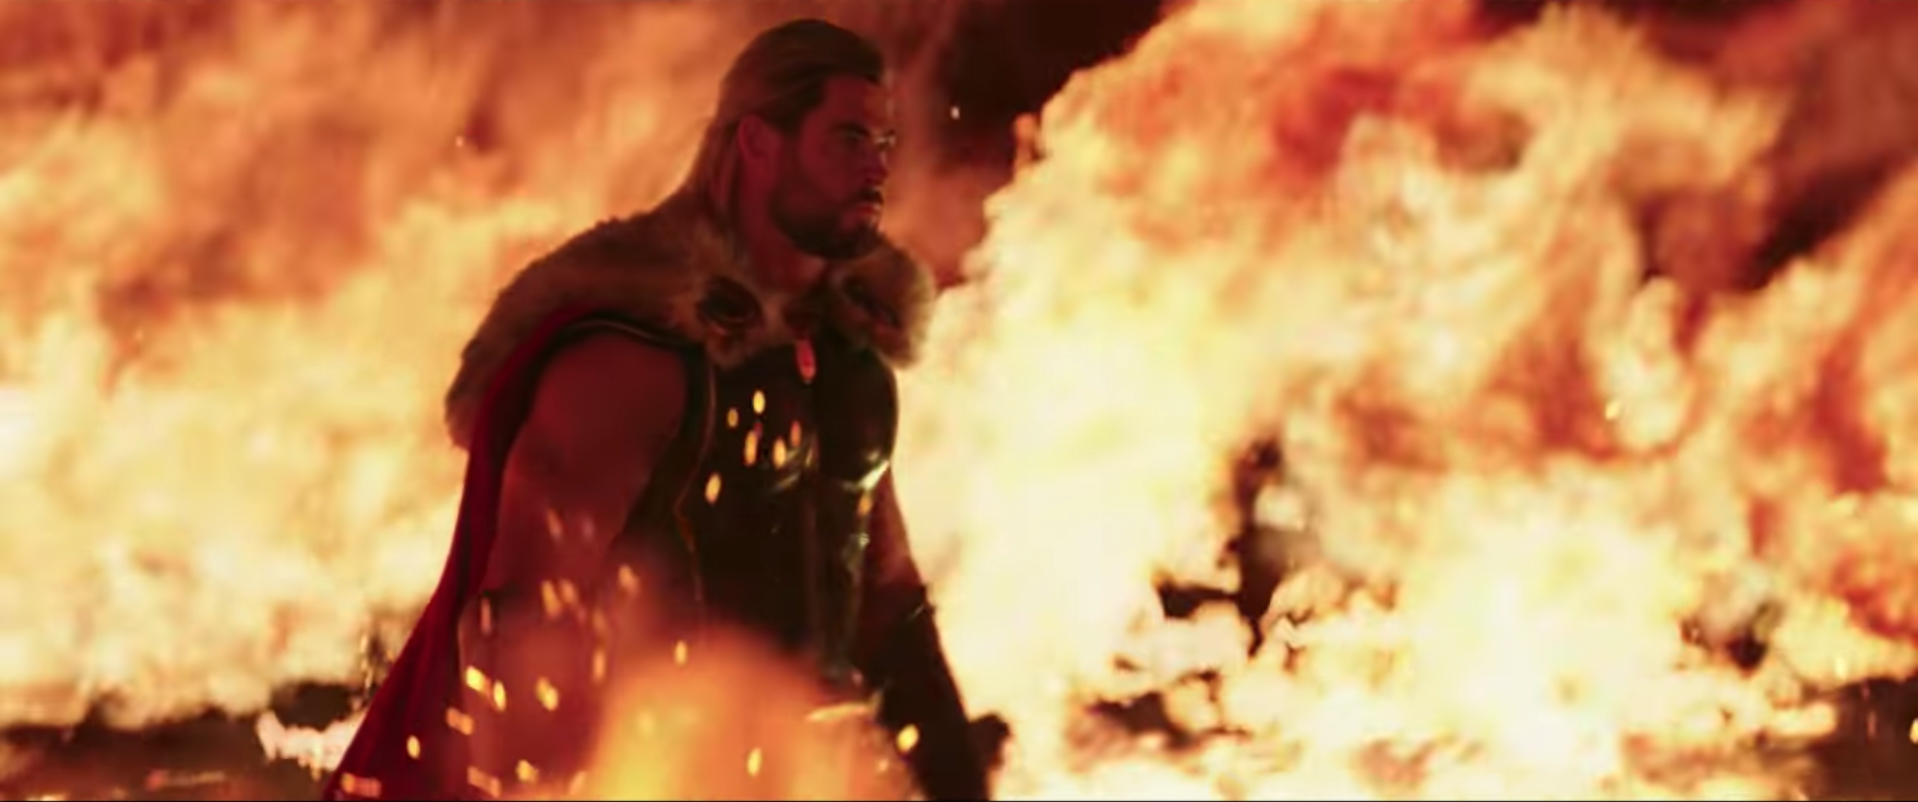 Checa por acá el primer teaser de 'Thor: Love and Thunder' con Natalie Portman